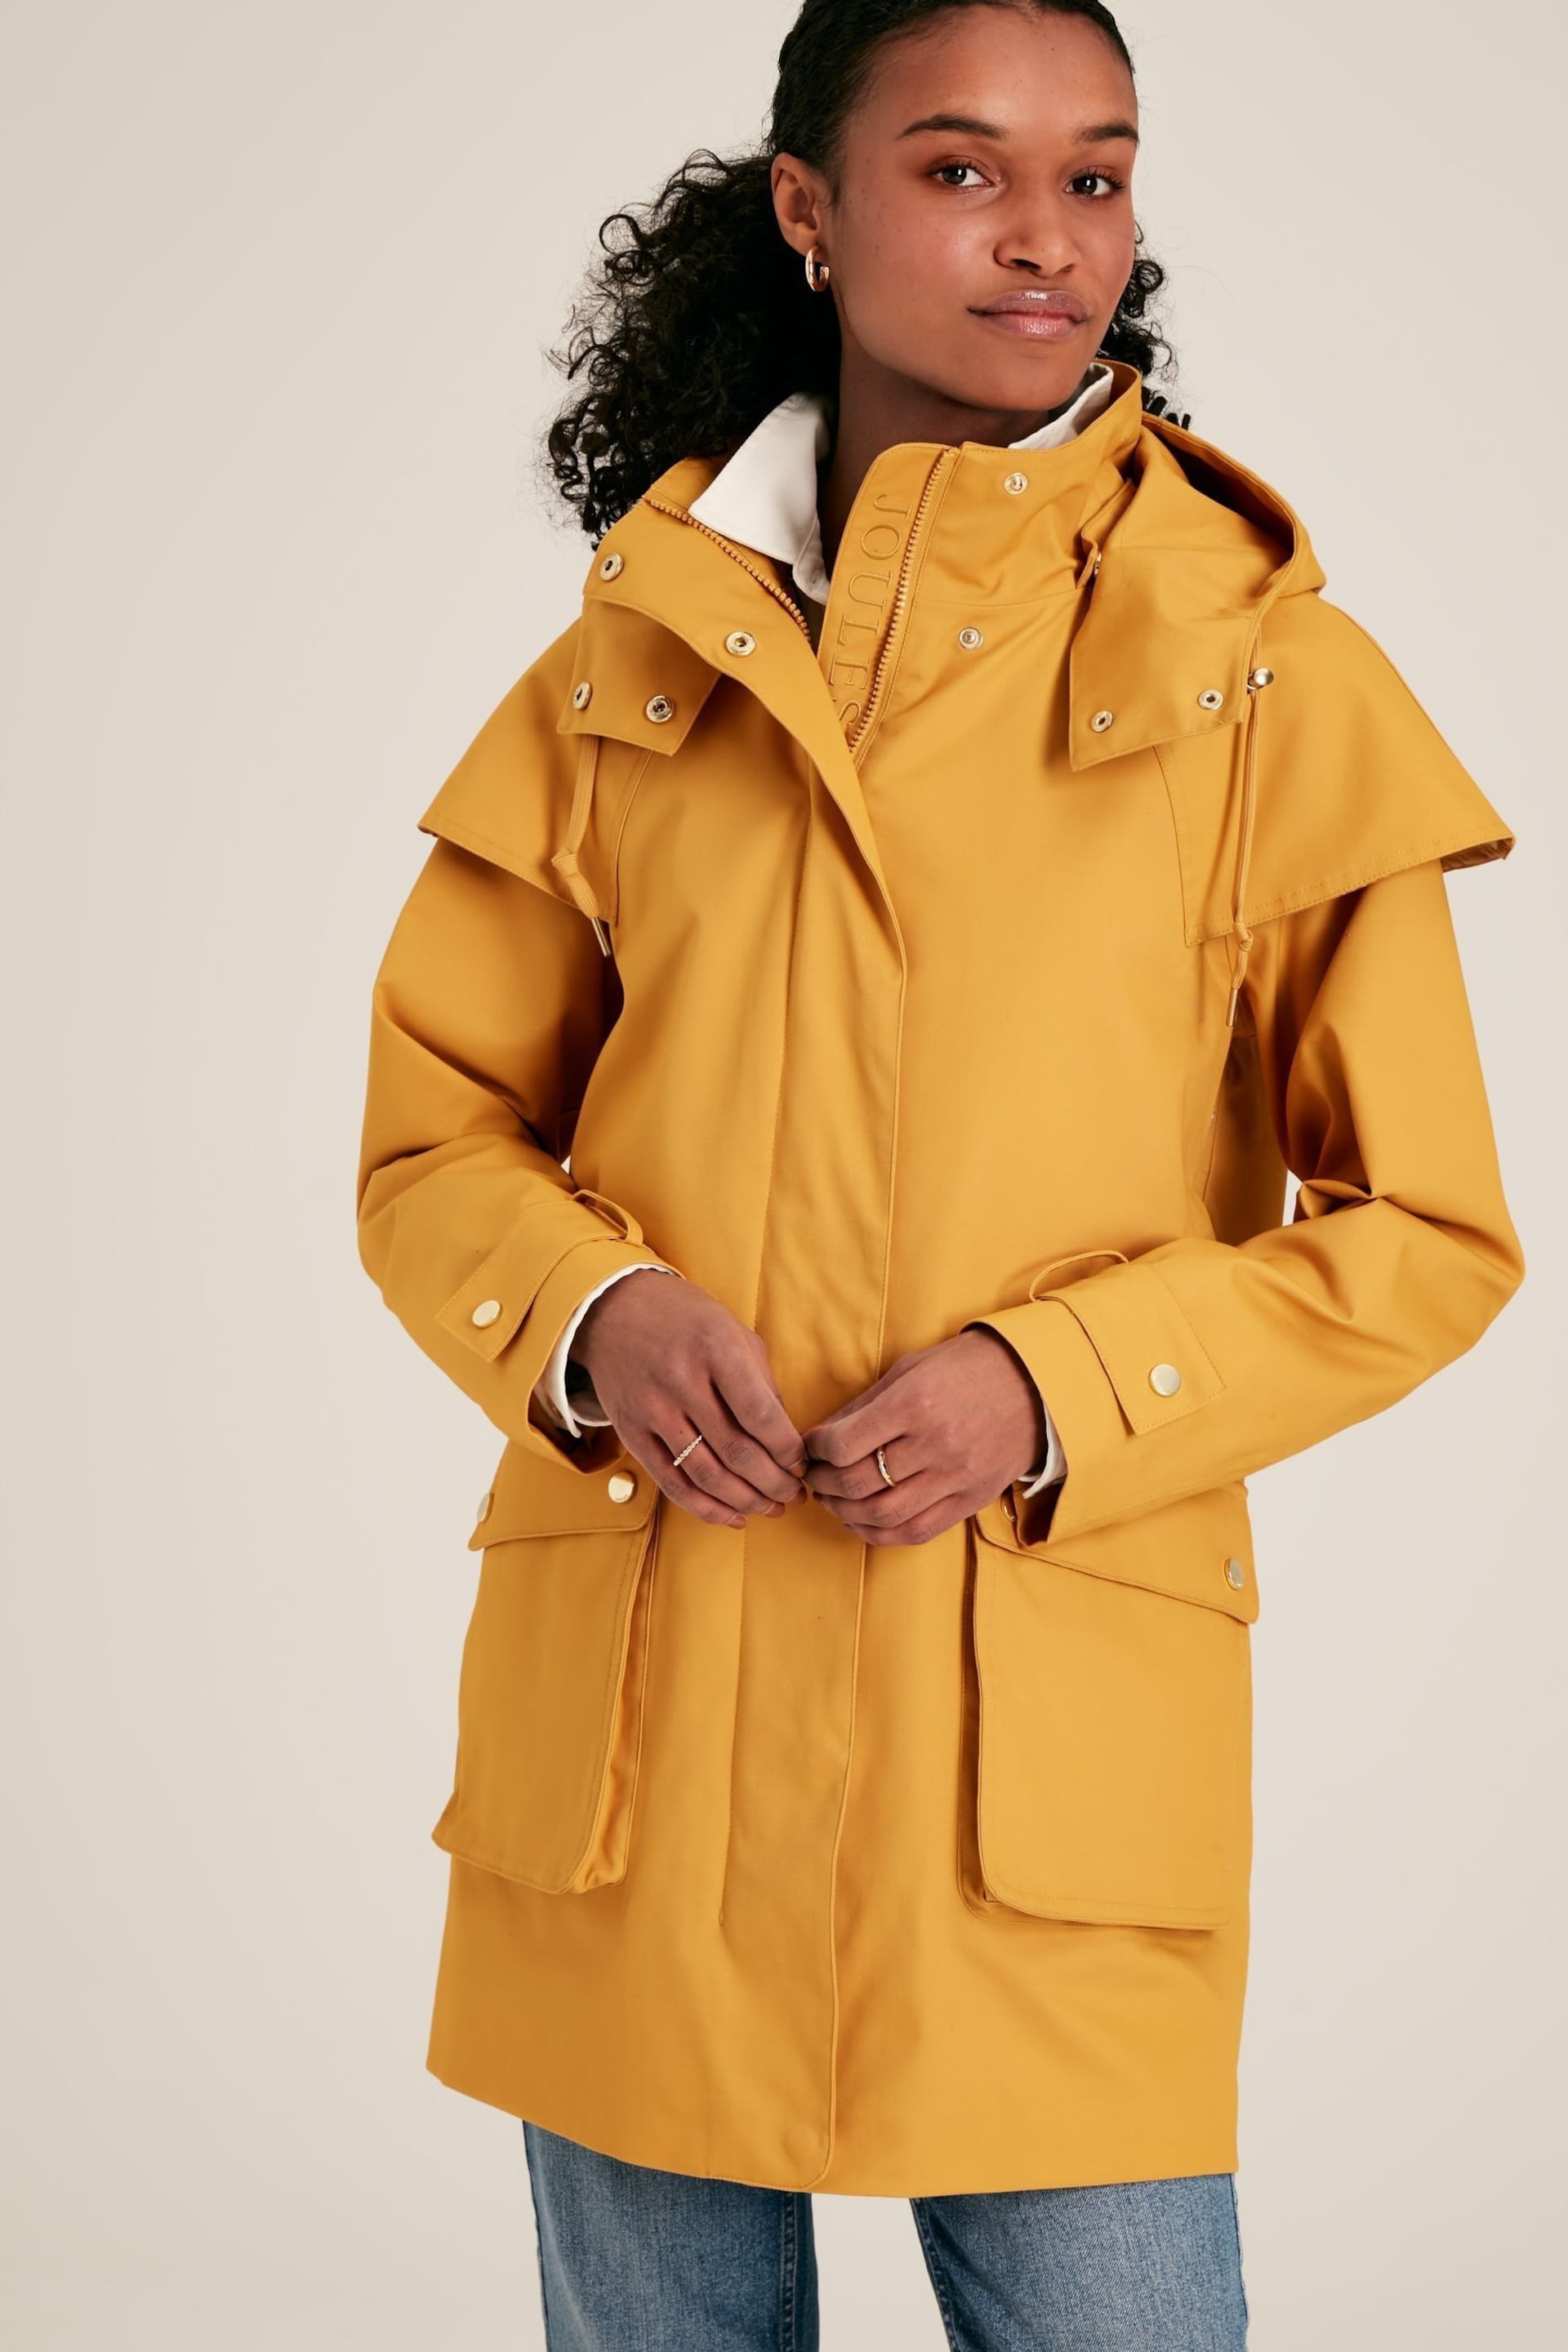 Joules Edinburgh Yellow Premium Waterproof Hooded Raincoat - Image 1 of 10